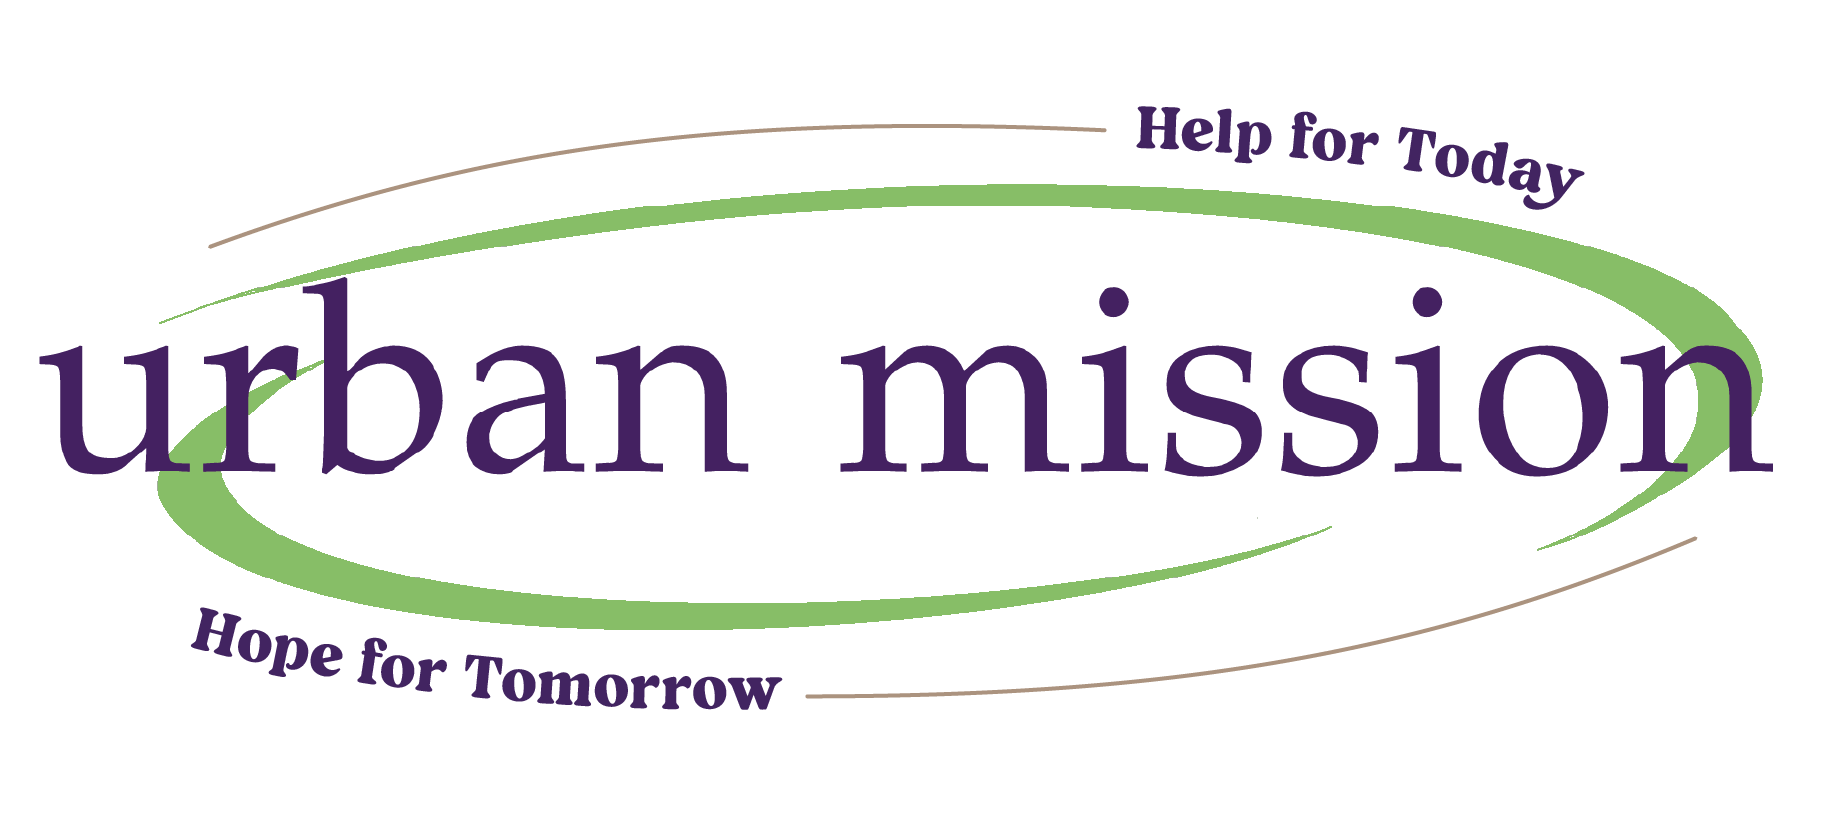 The Urban Mission logo